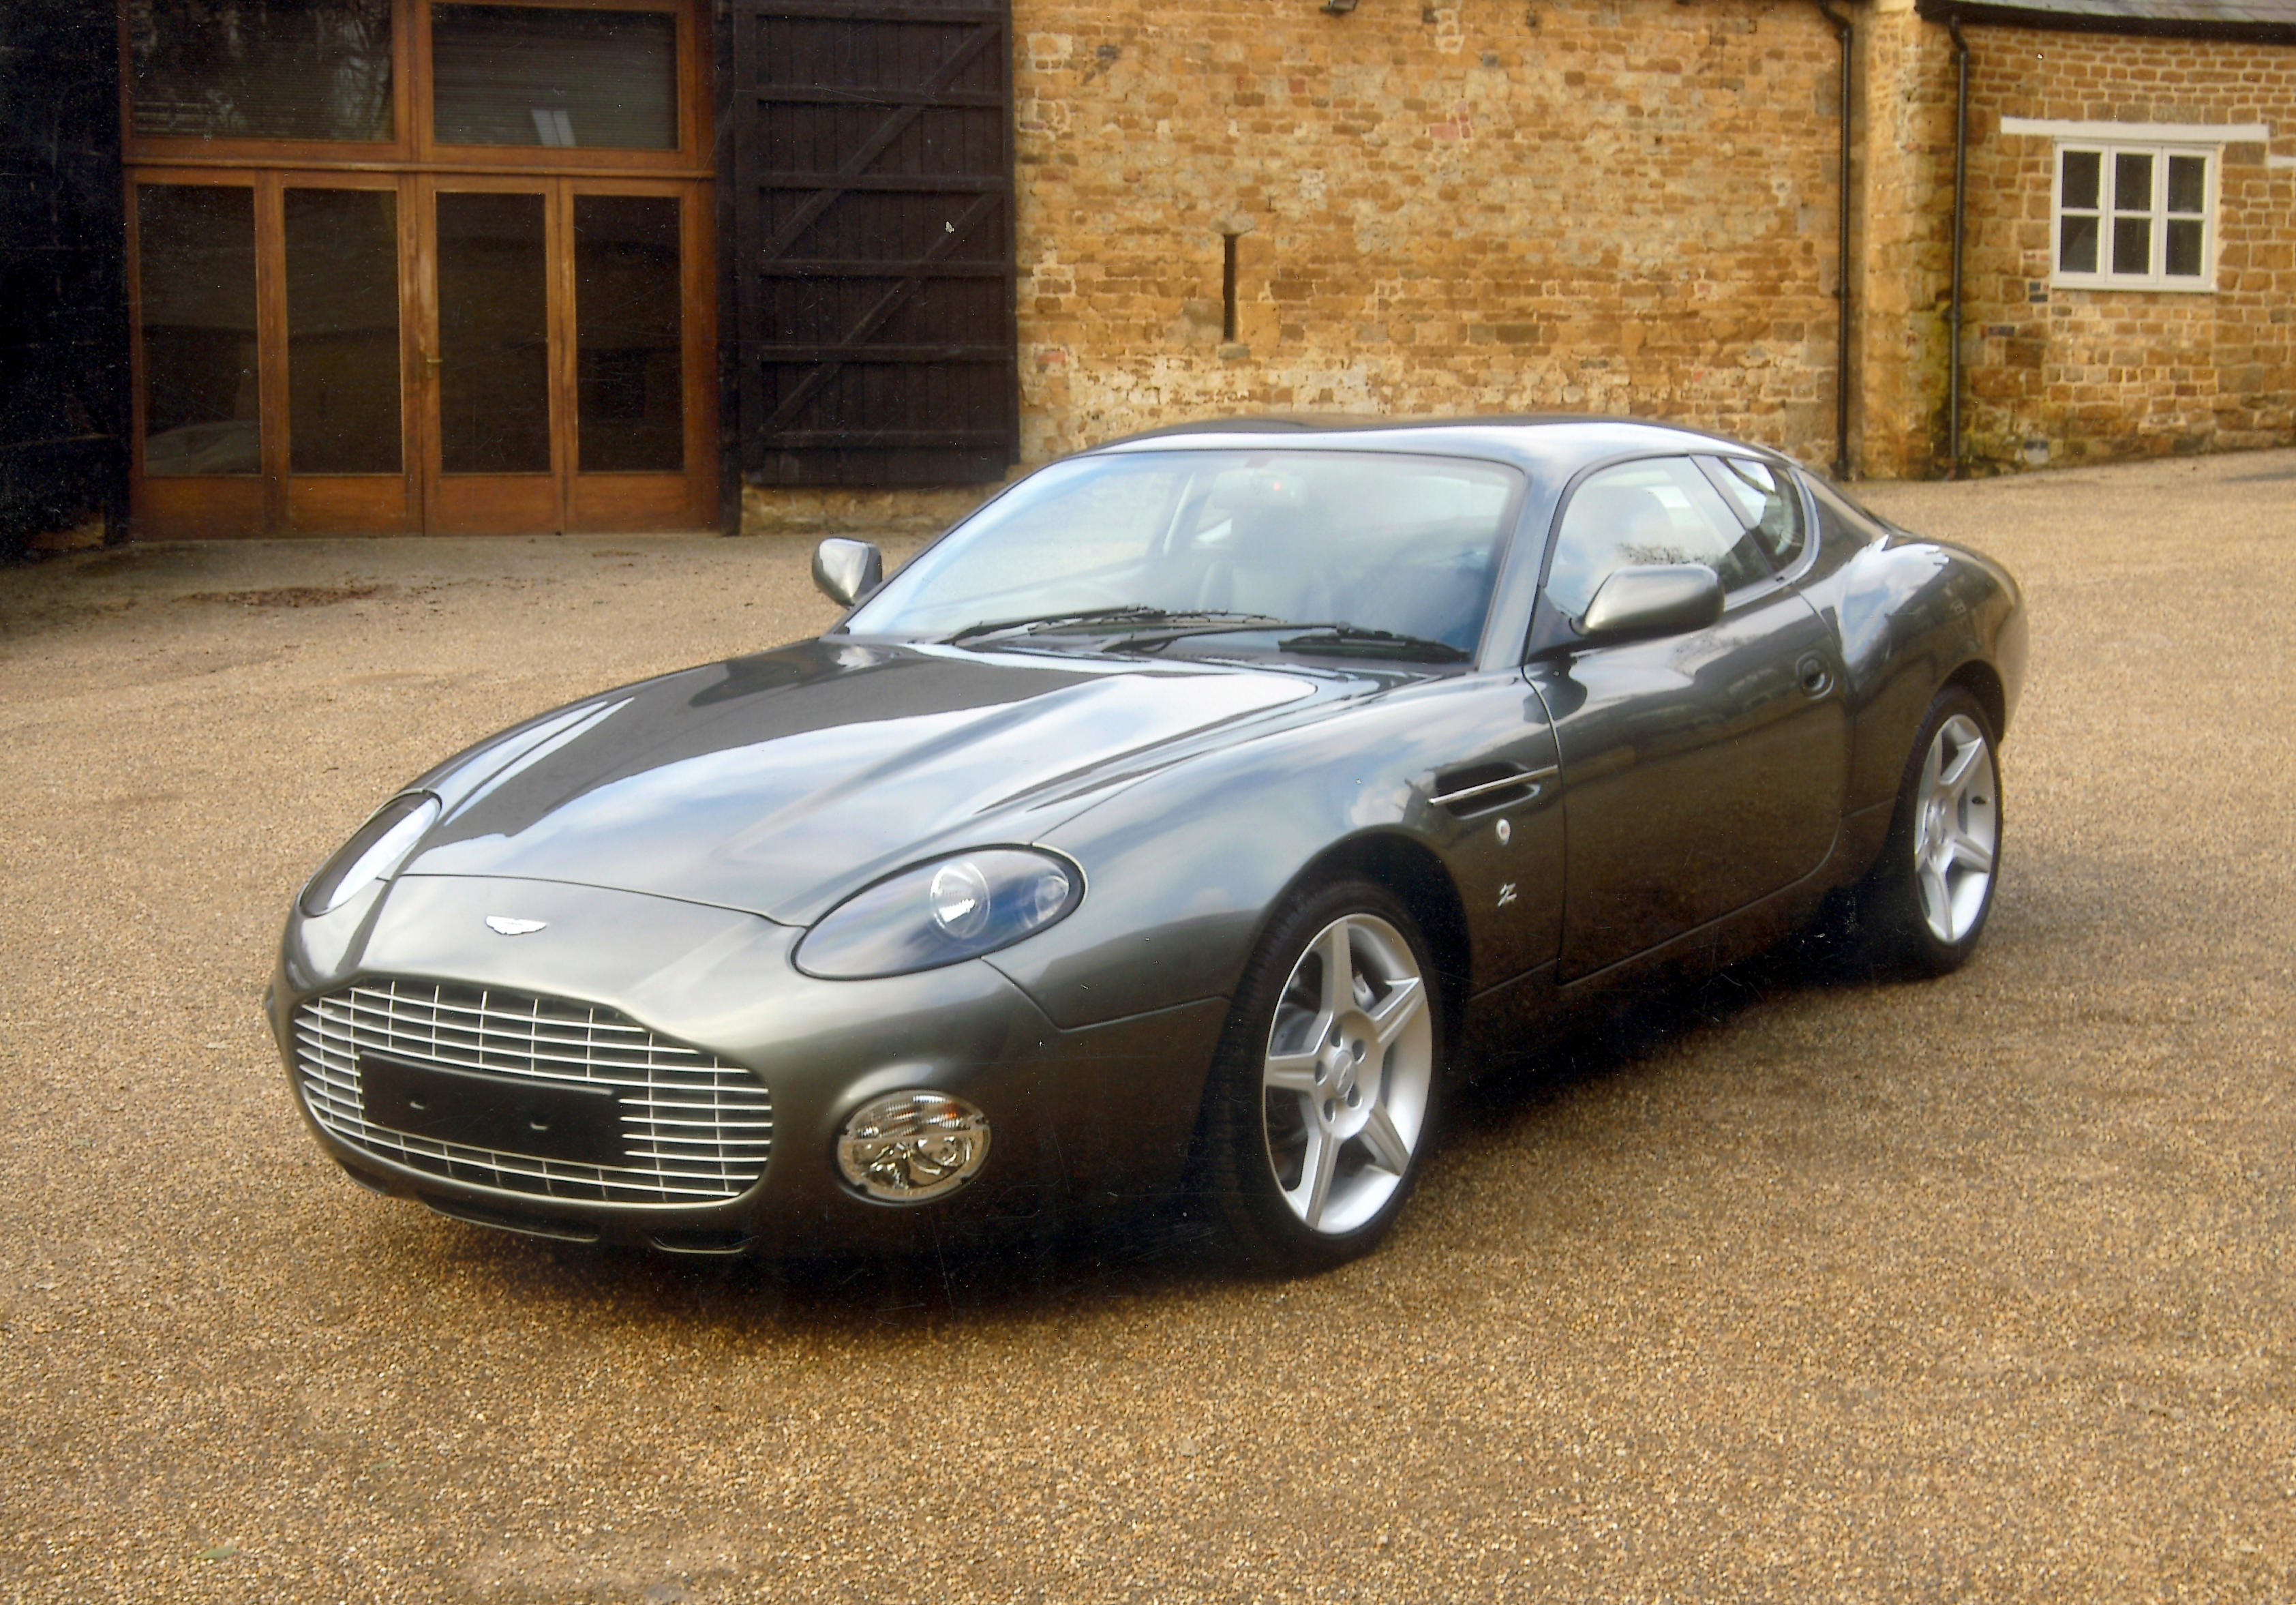 Bonhams Cars : One owner, 11,000 miles from new,2004 Aston Martin DB7 ...